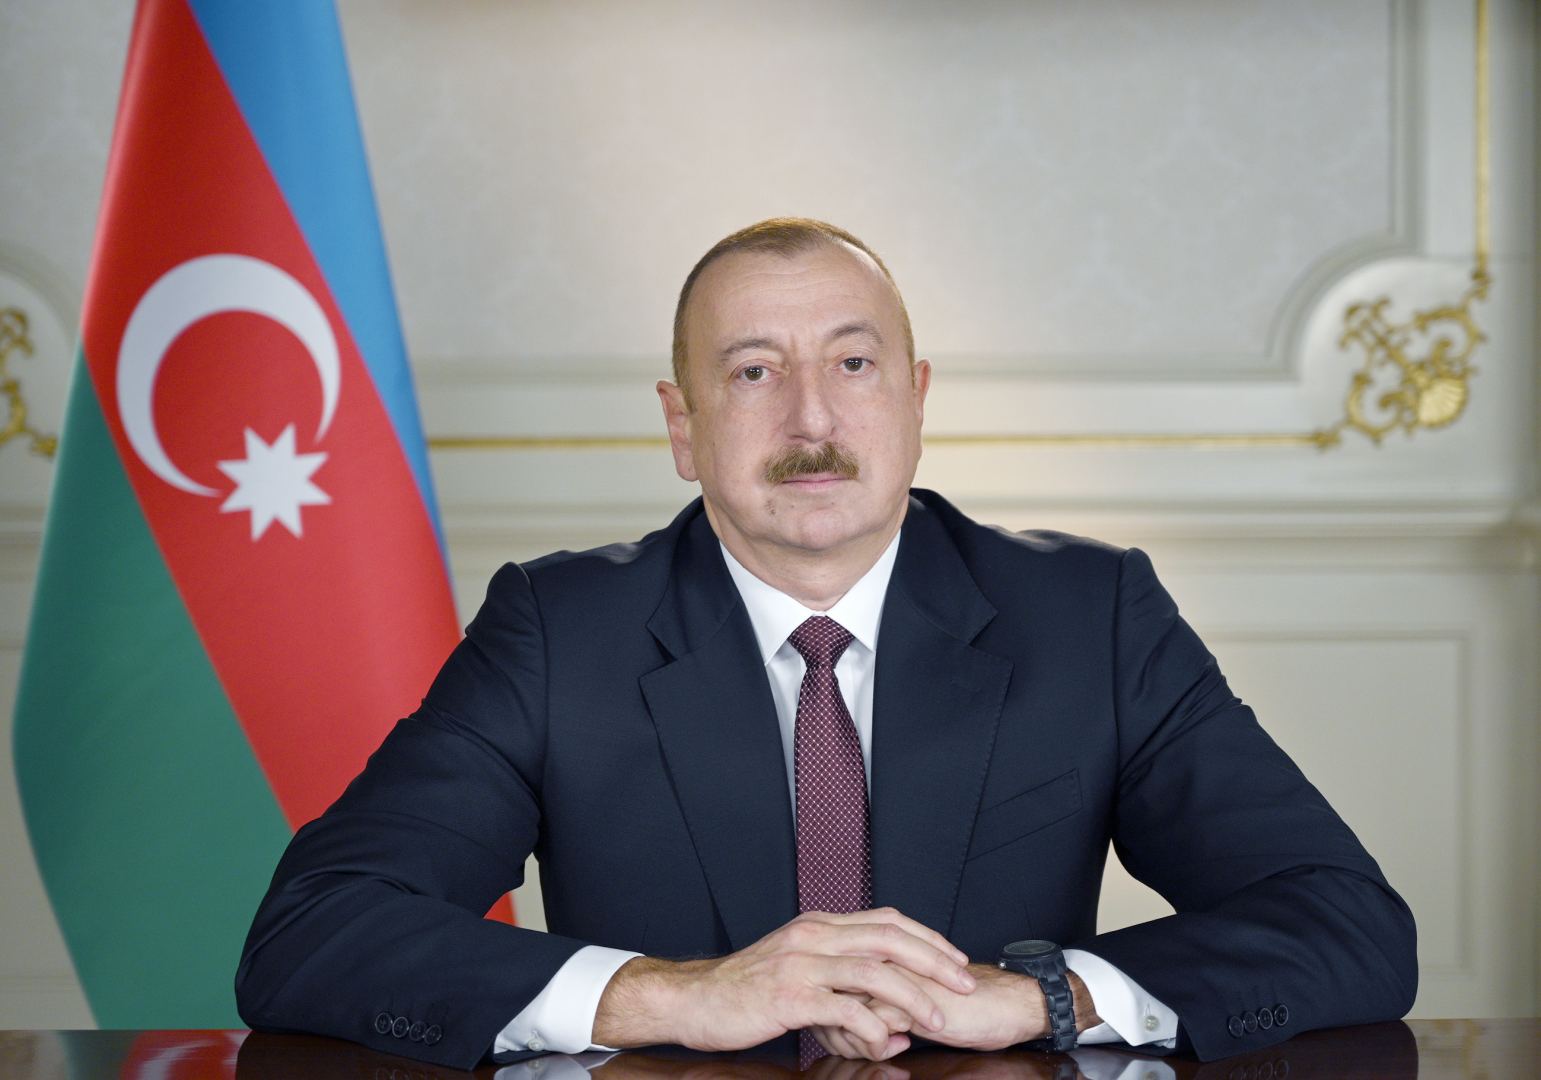 Azerbaijani Army liberates 3 villages of Fuzuli district, 4 villages of Jabrayil district - President Ilham Aliyev